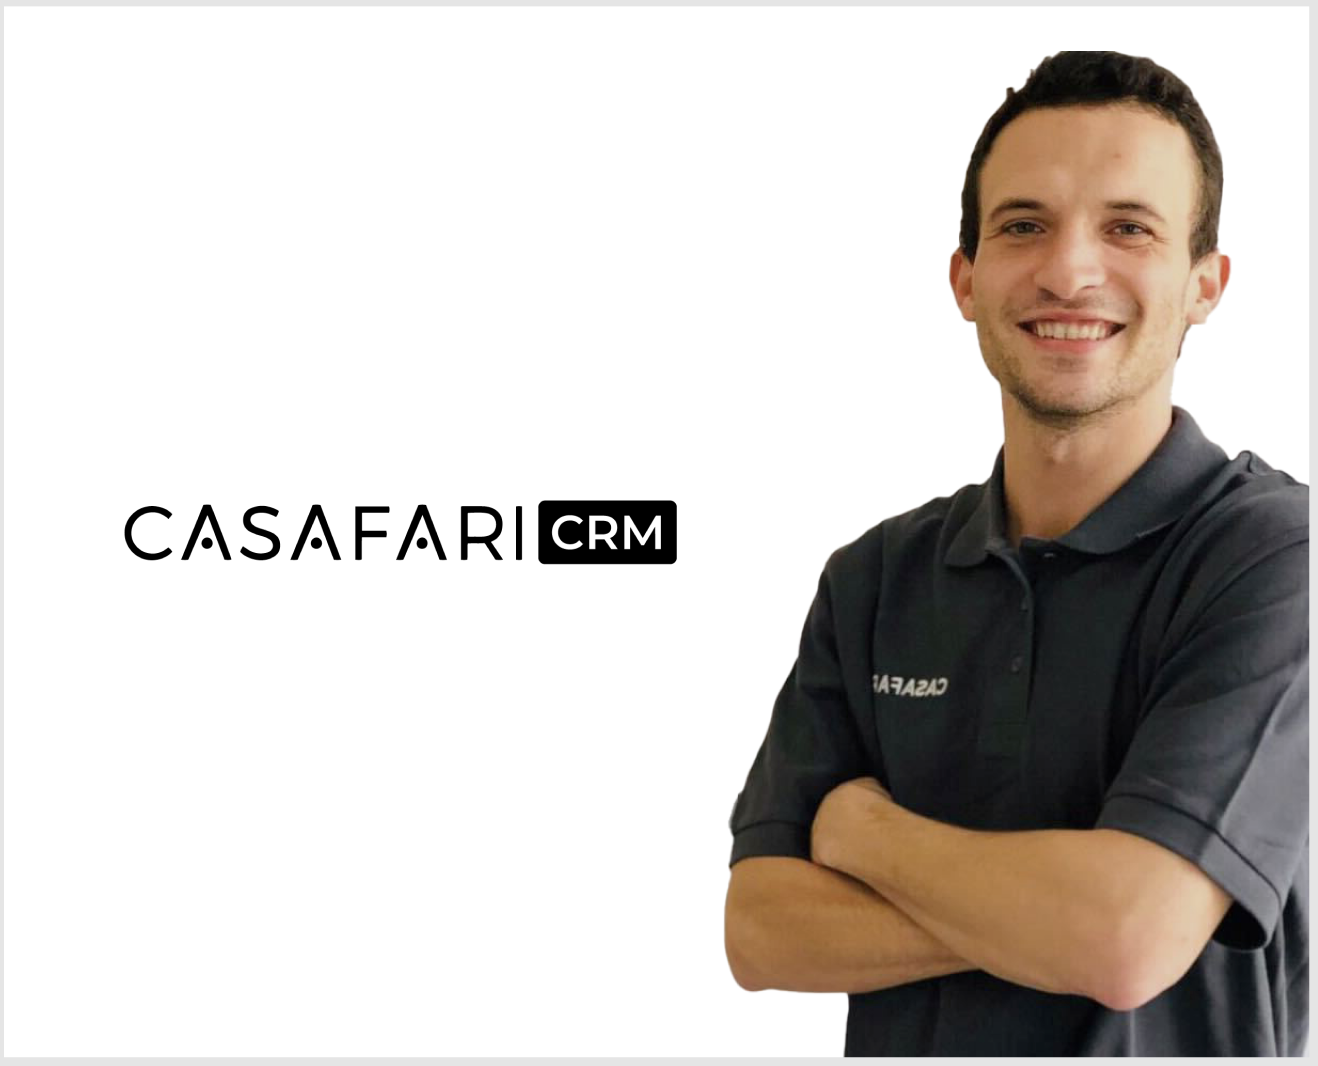 Afonso Azevedo, Account Manager en CASAFARI CRM